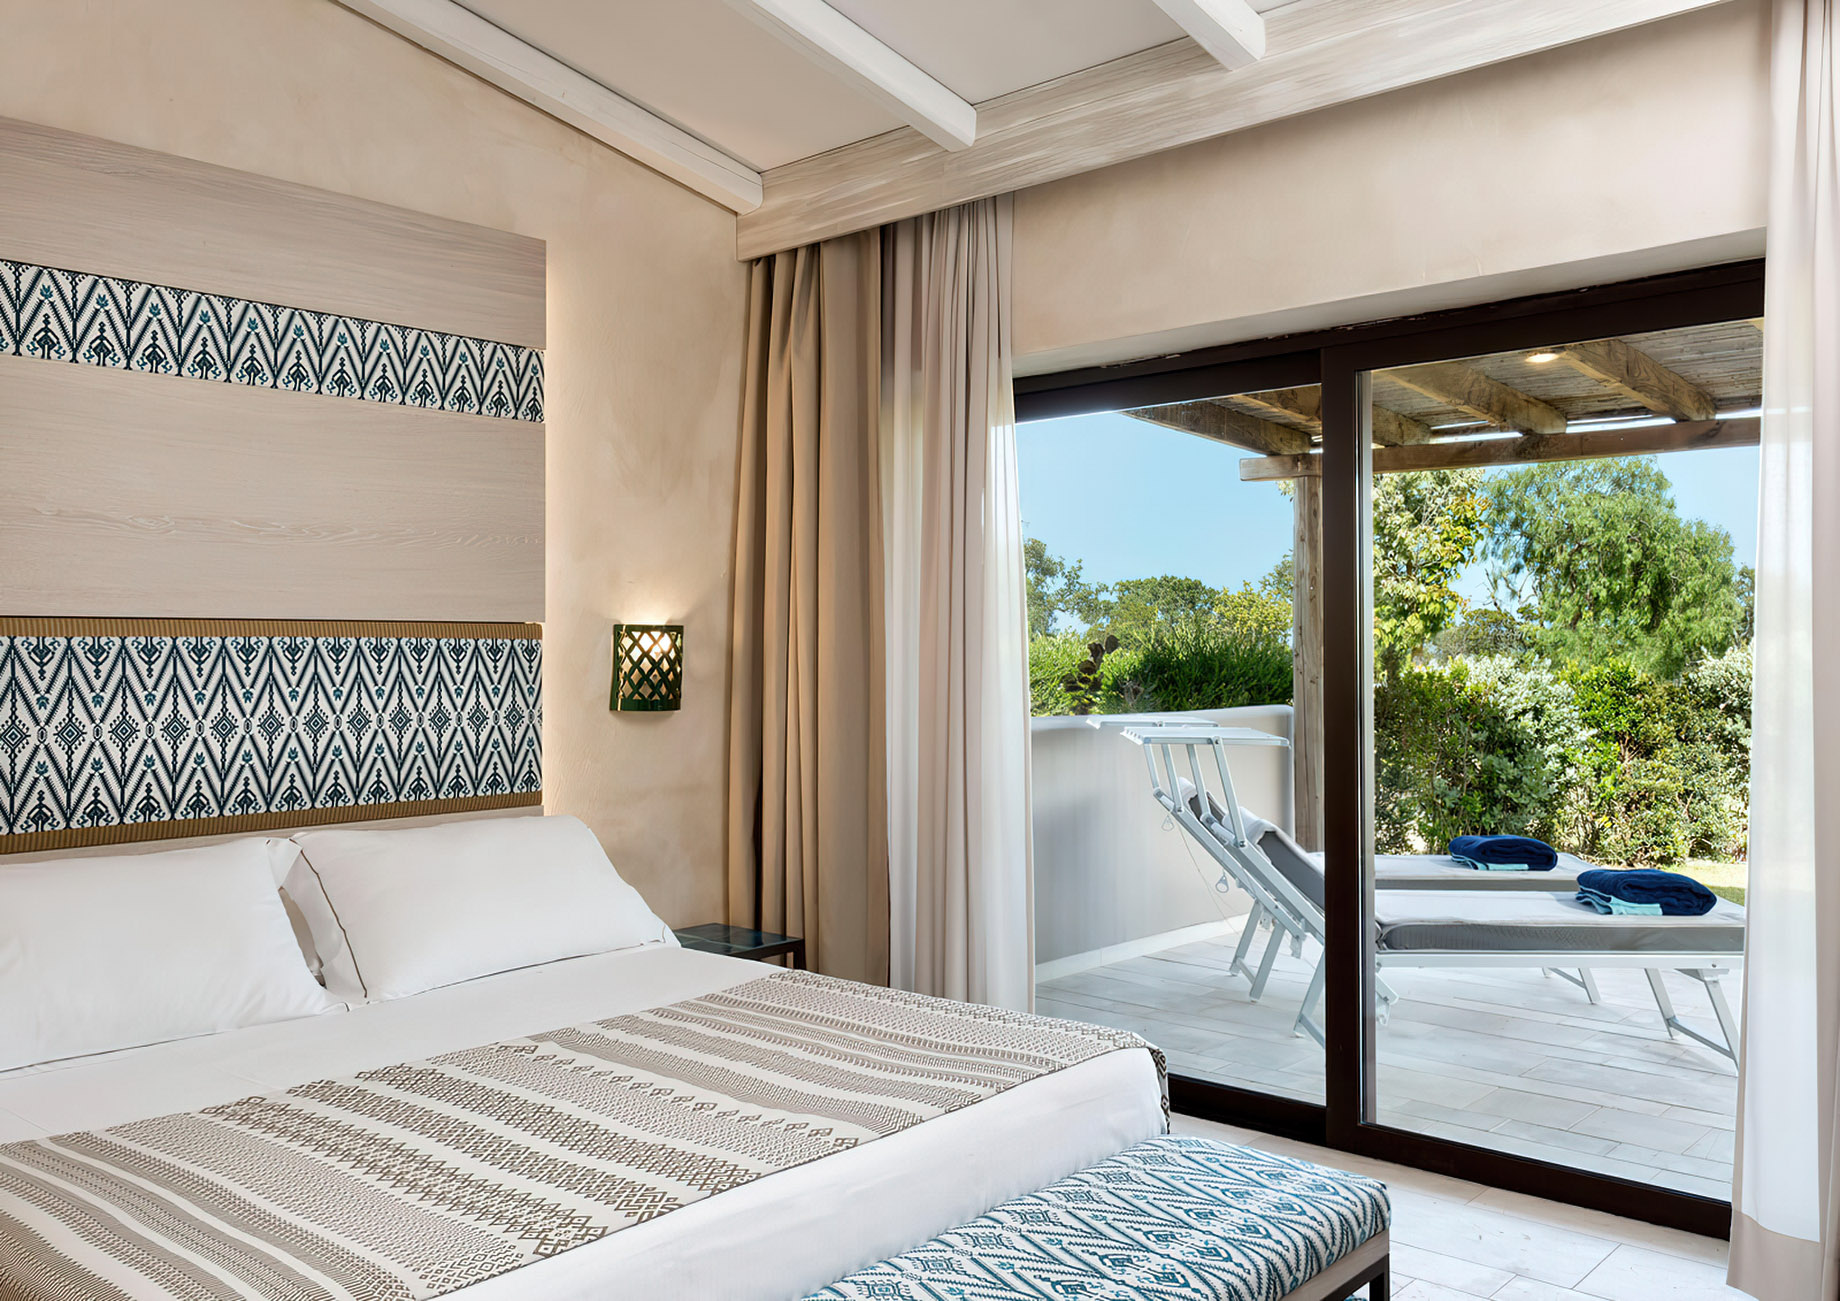 Baglioni Resort Sardinia – San Teodoro, Sardegna, Italy – Garden Suite Bedroom